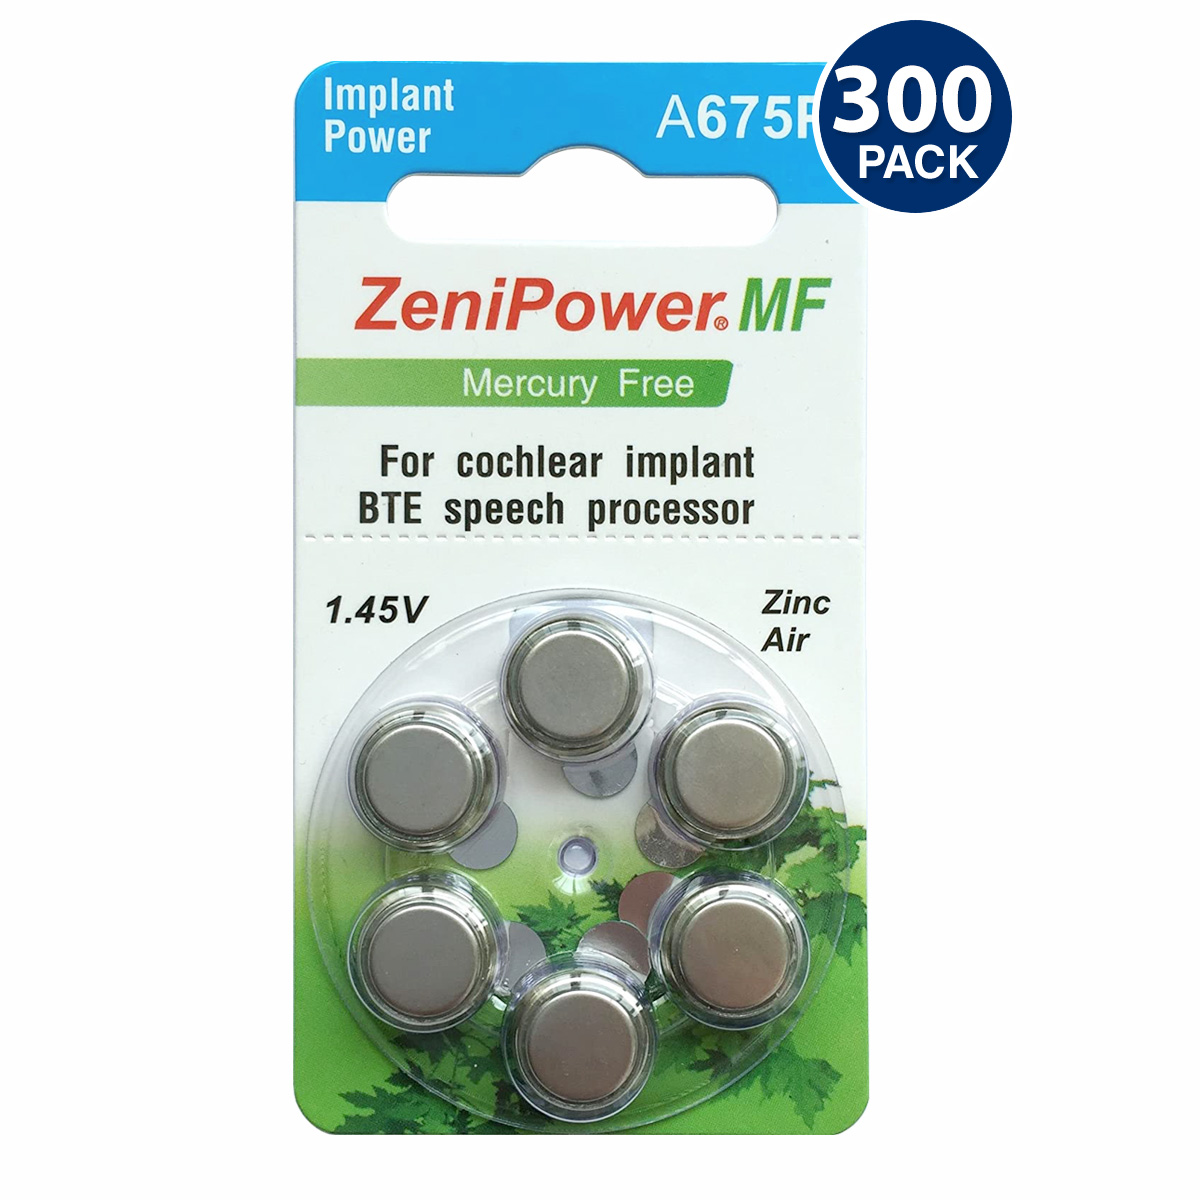 ZeniPower Size 675P Cochlear Implant Battery Mercury-Free (300 pcs.)